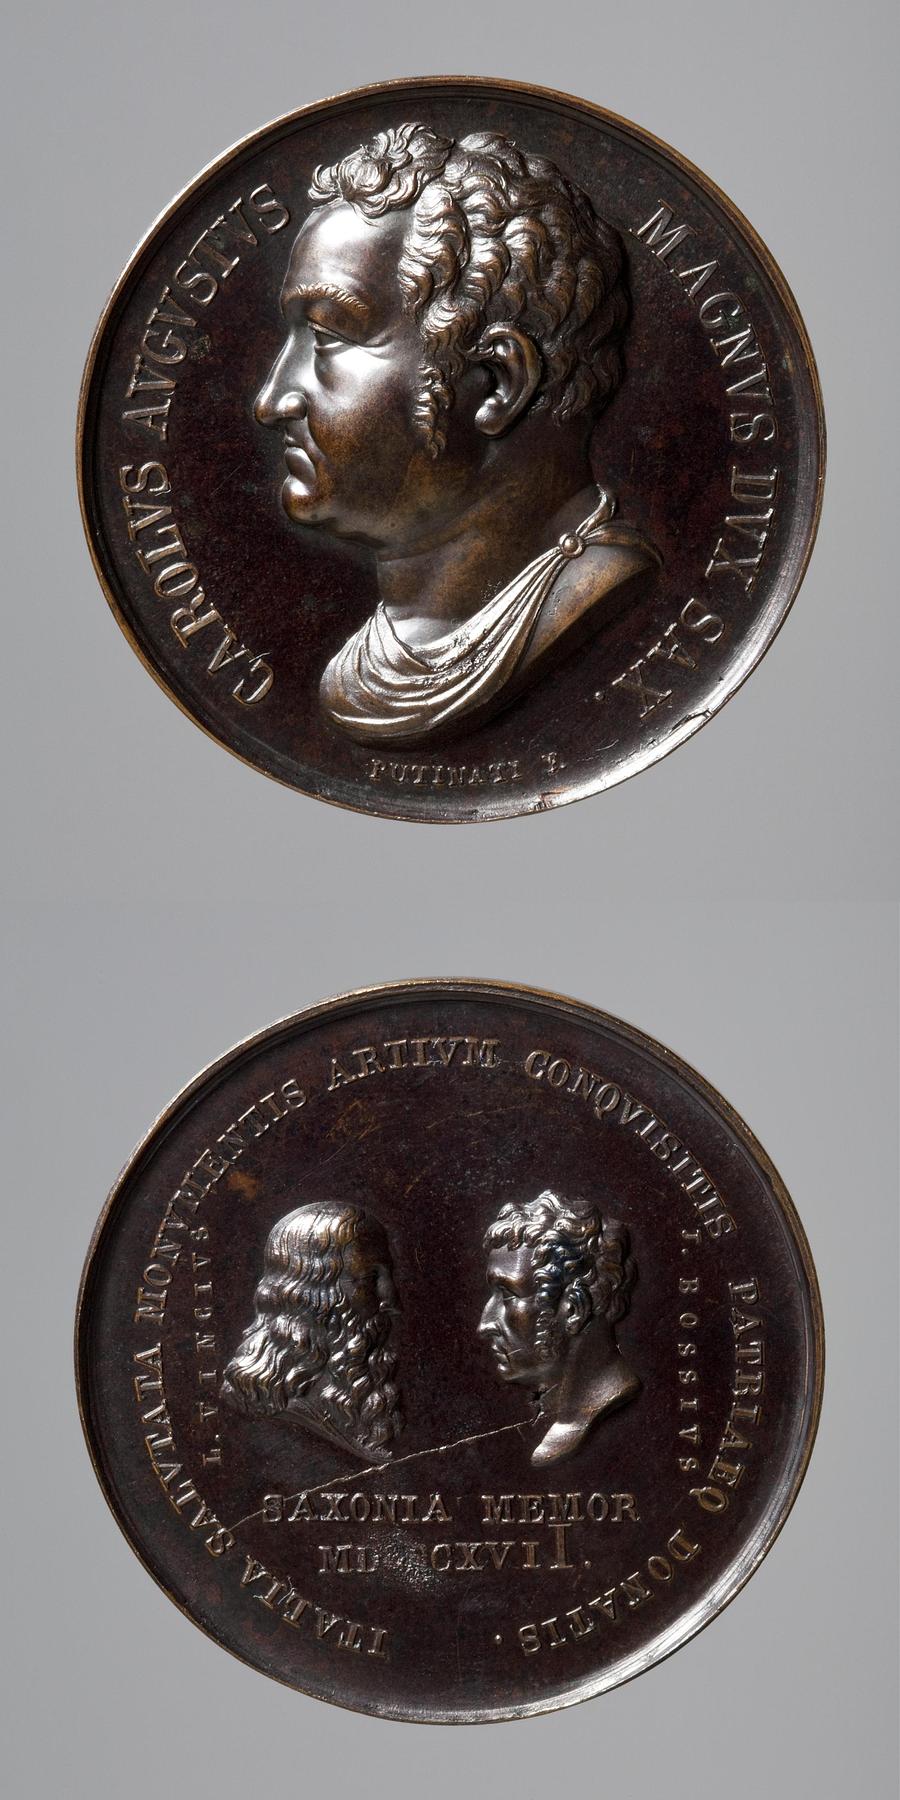 Medaljens forside: Storhertug Carl August af Sachsen-Weimar. Medaljens bagside: Leonardo da Vinci og Giuseppe Bossi, F110